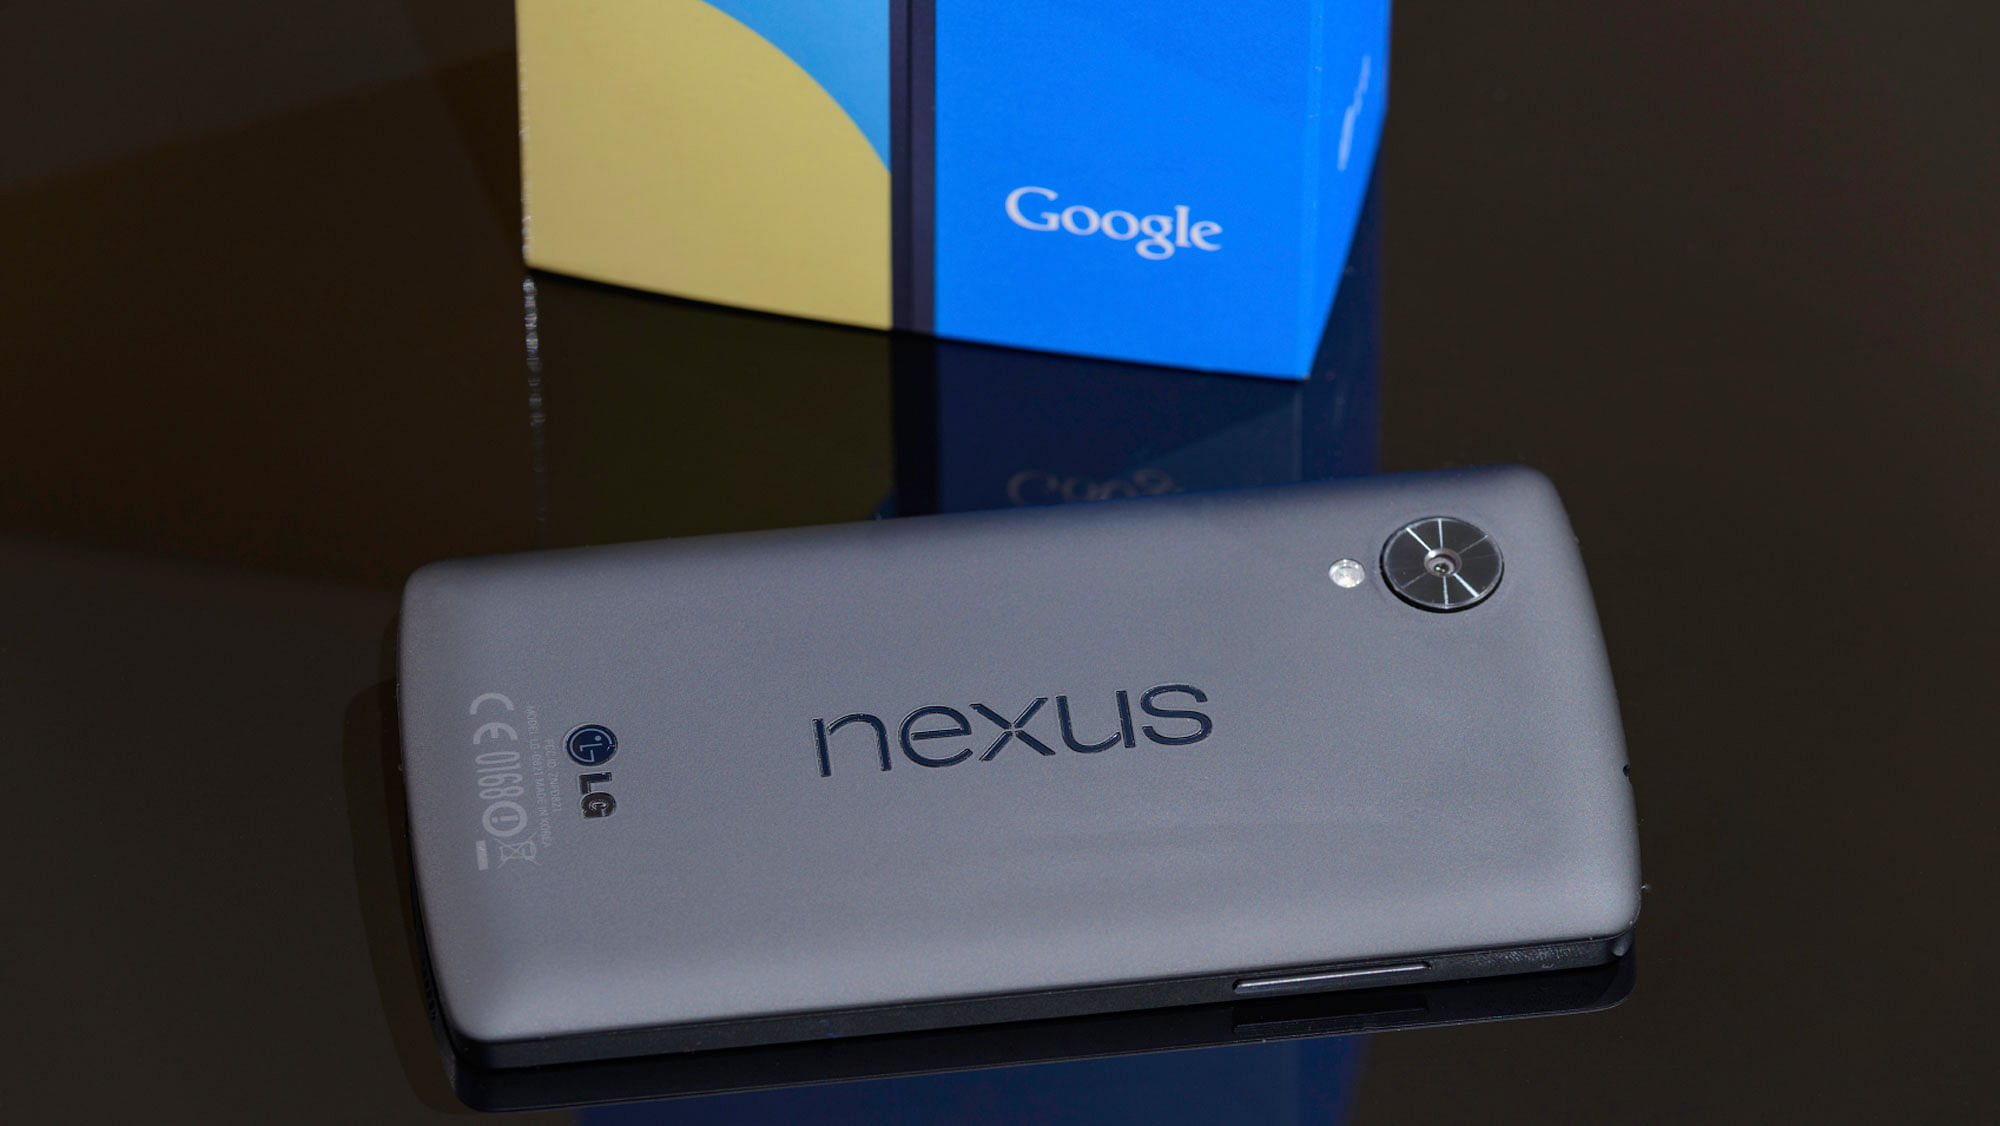 Google Nexus 5 was made by LG. (Photo: iStock)